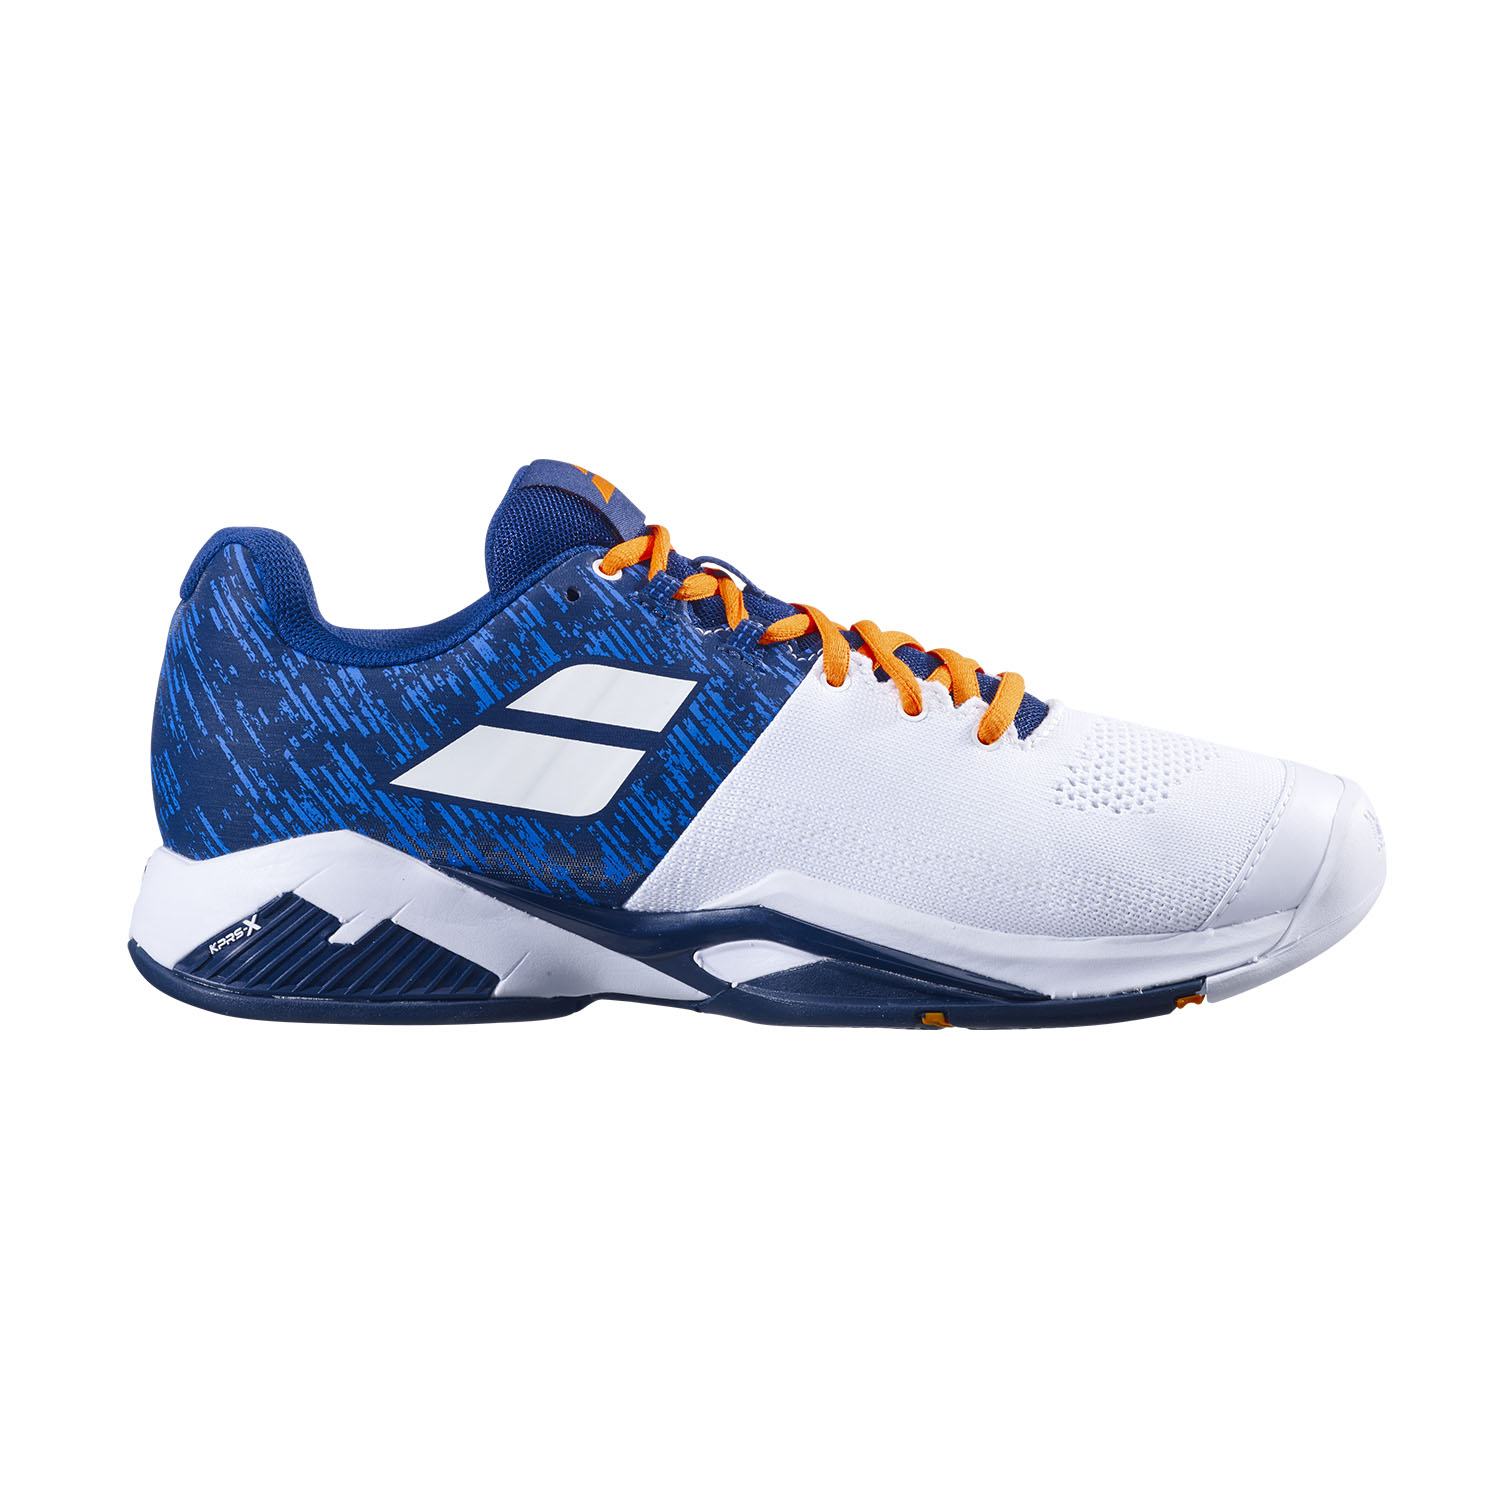 Babolat Propulse Blast AC Men's Tennis Shoes - White/Dark Blue